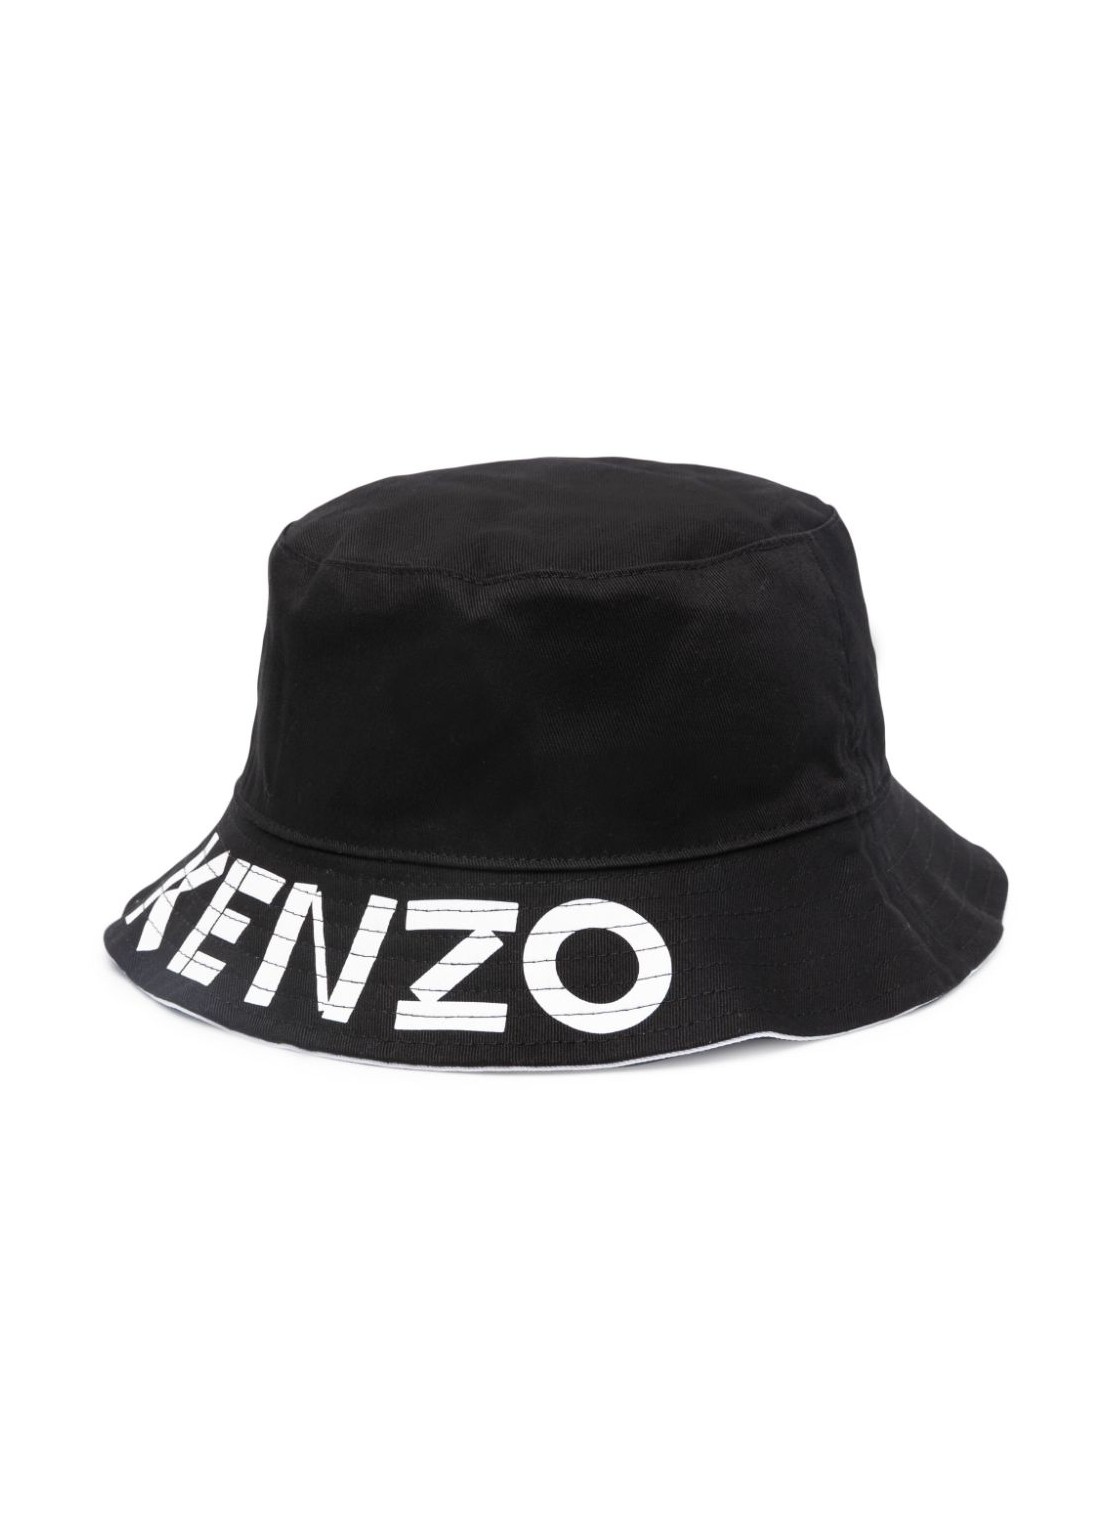 Gorras kenzo cap woman bucket hat fe58ac104f31 99 talla negro
 